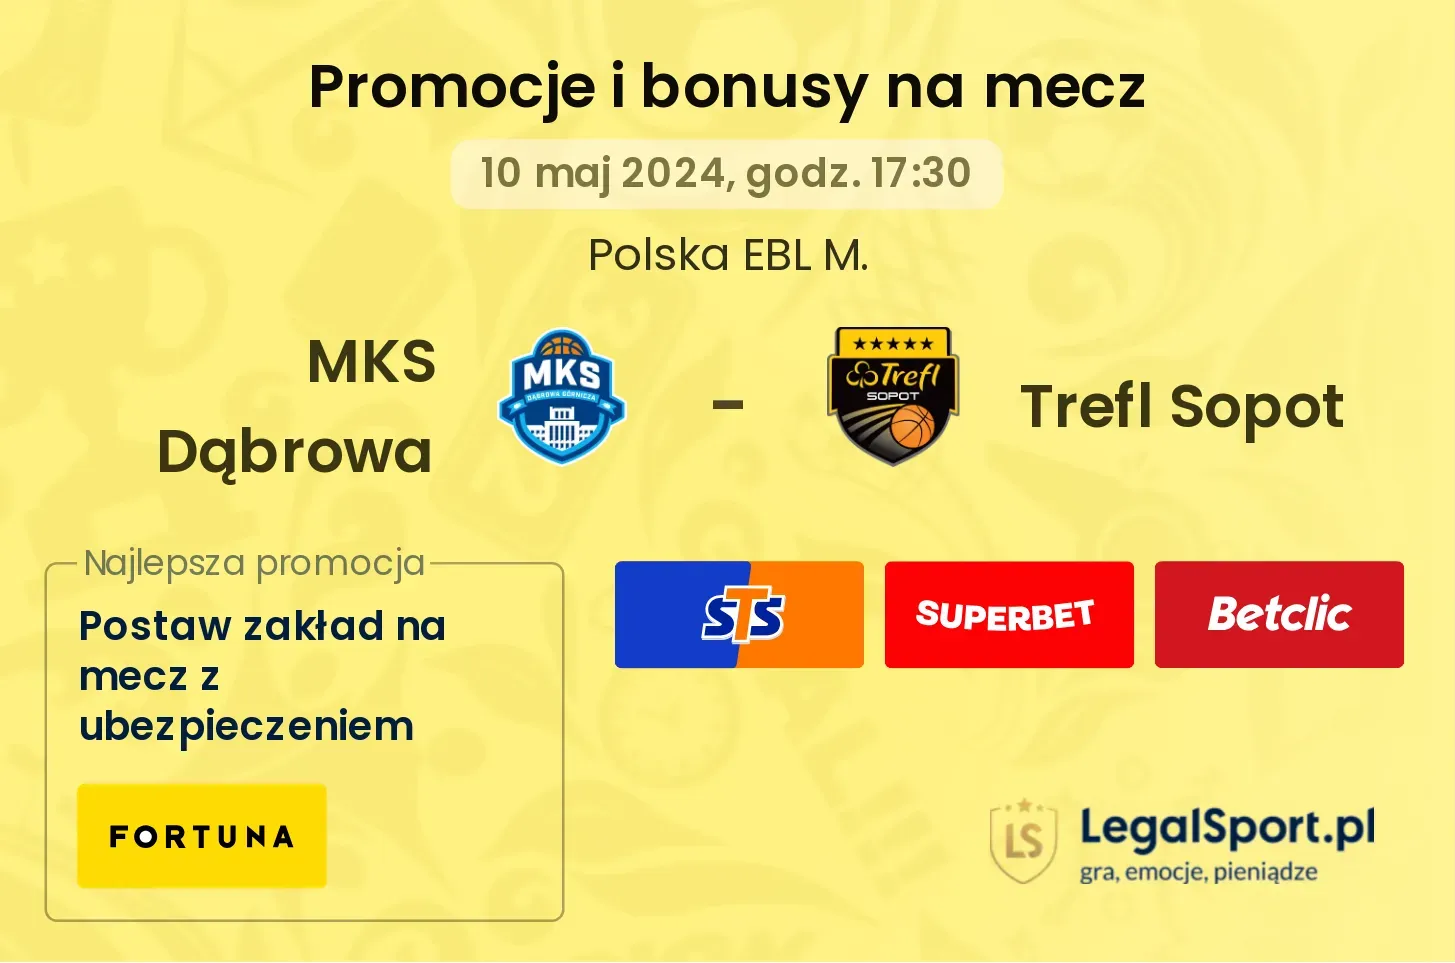 MKS Dąbrowa - Trefl Sopot promocje bonusy na mecz